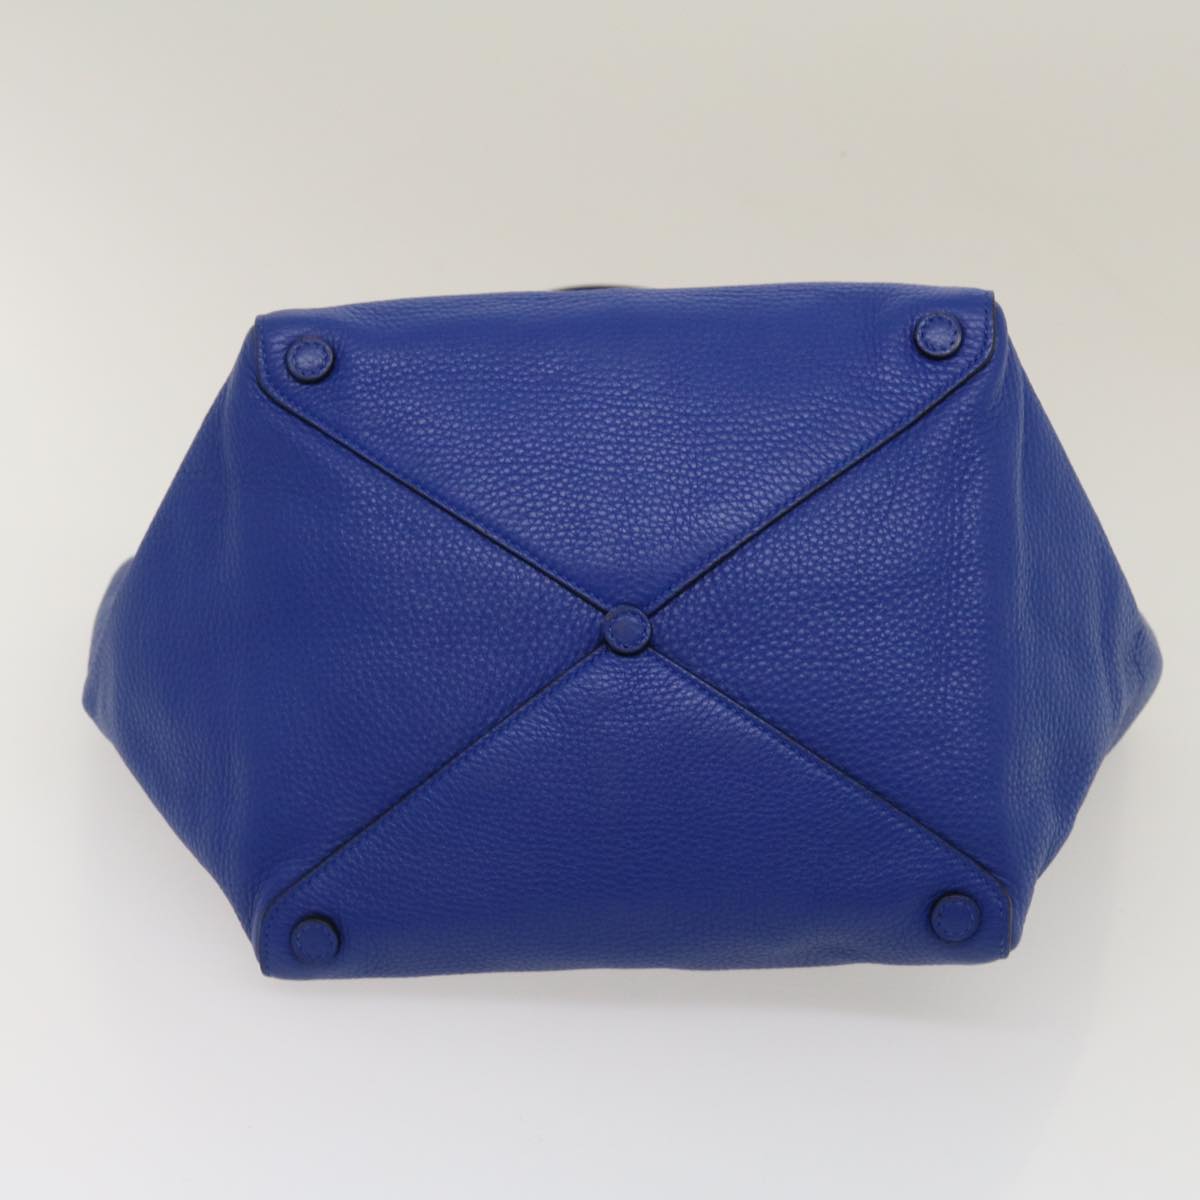 PRADA Tote Bag Leather Blue Auth ar7059